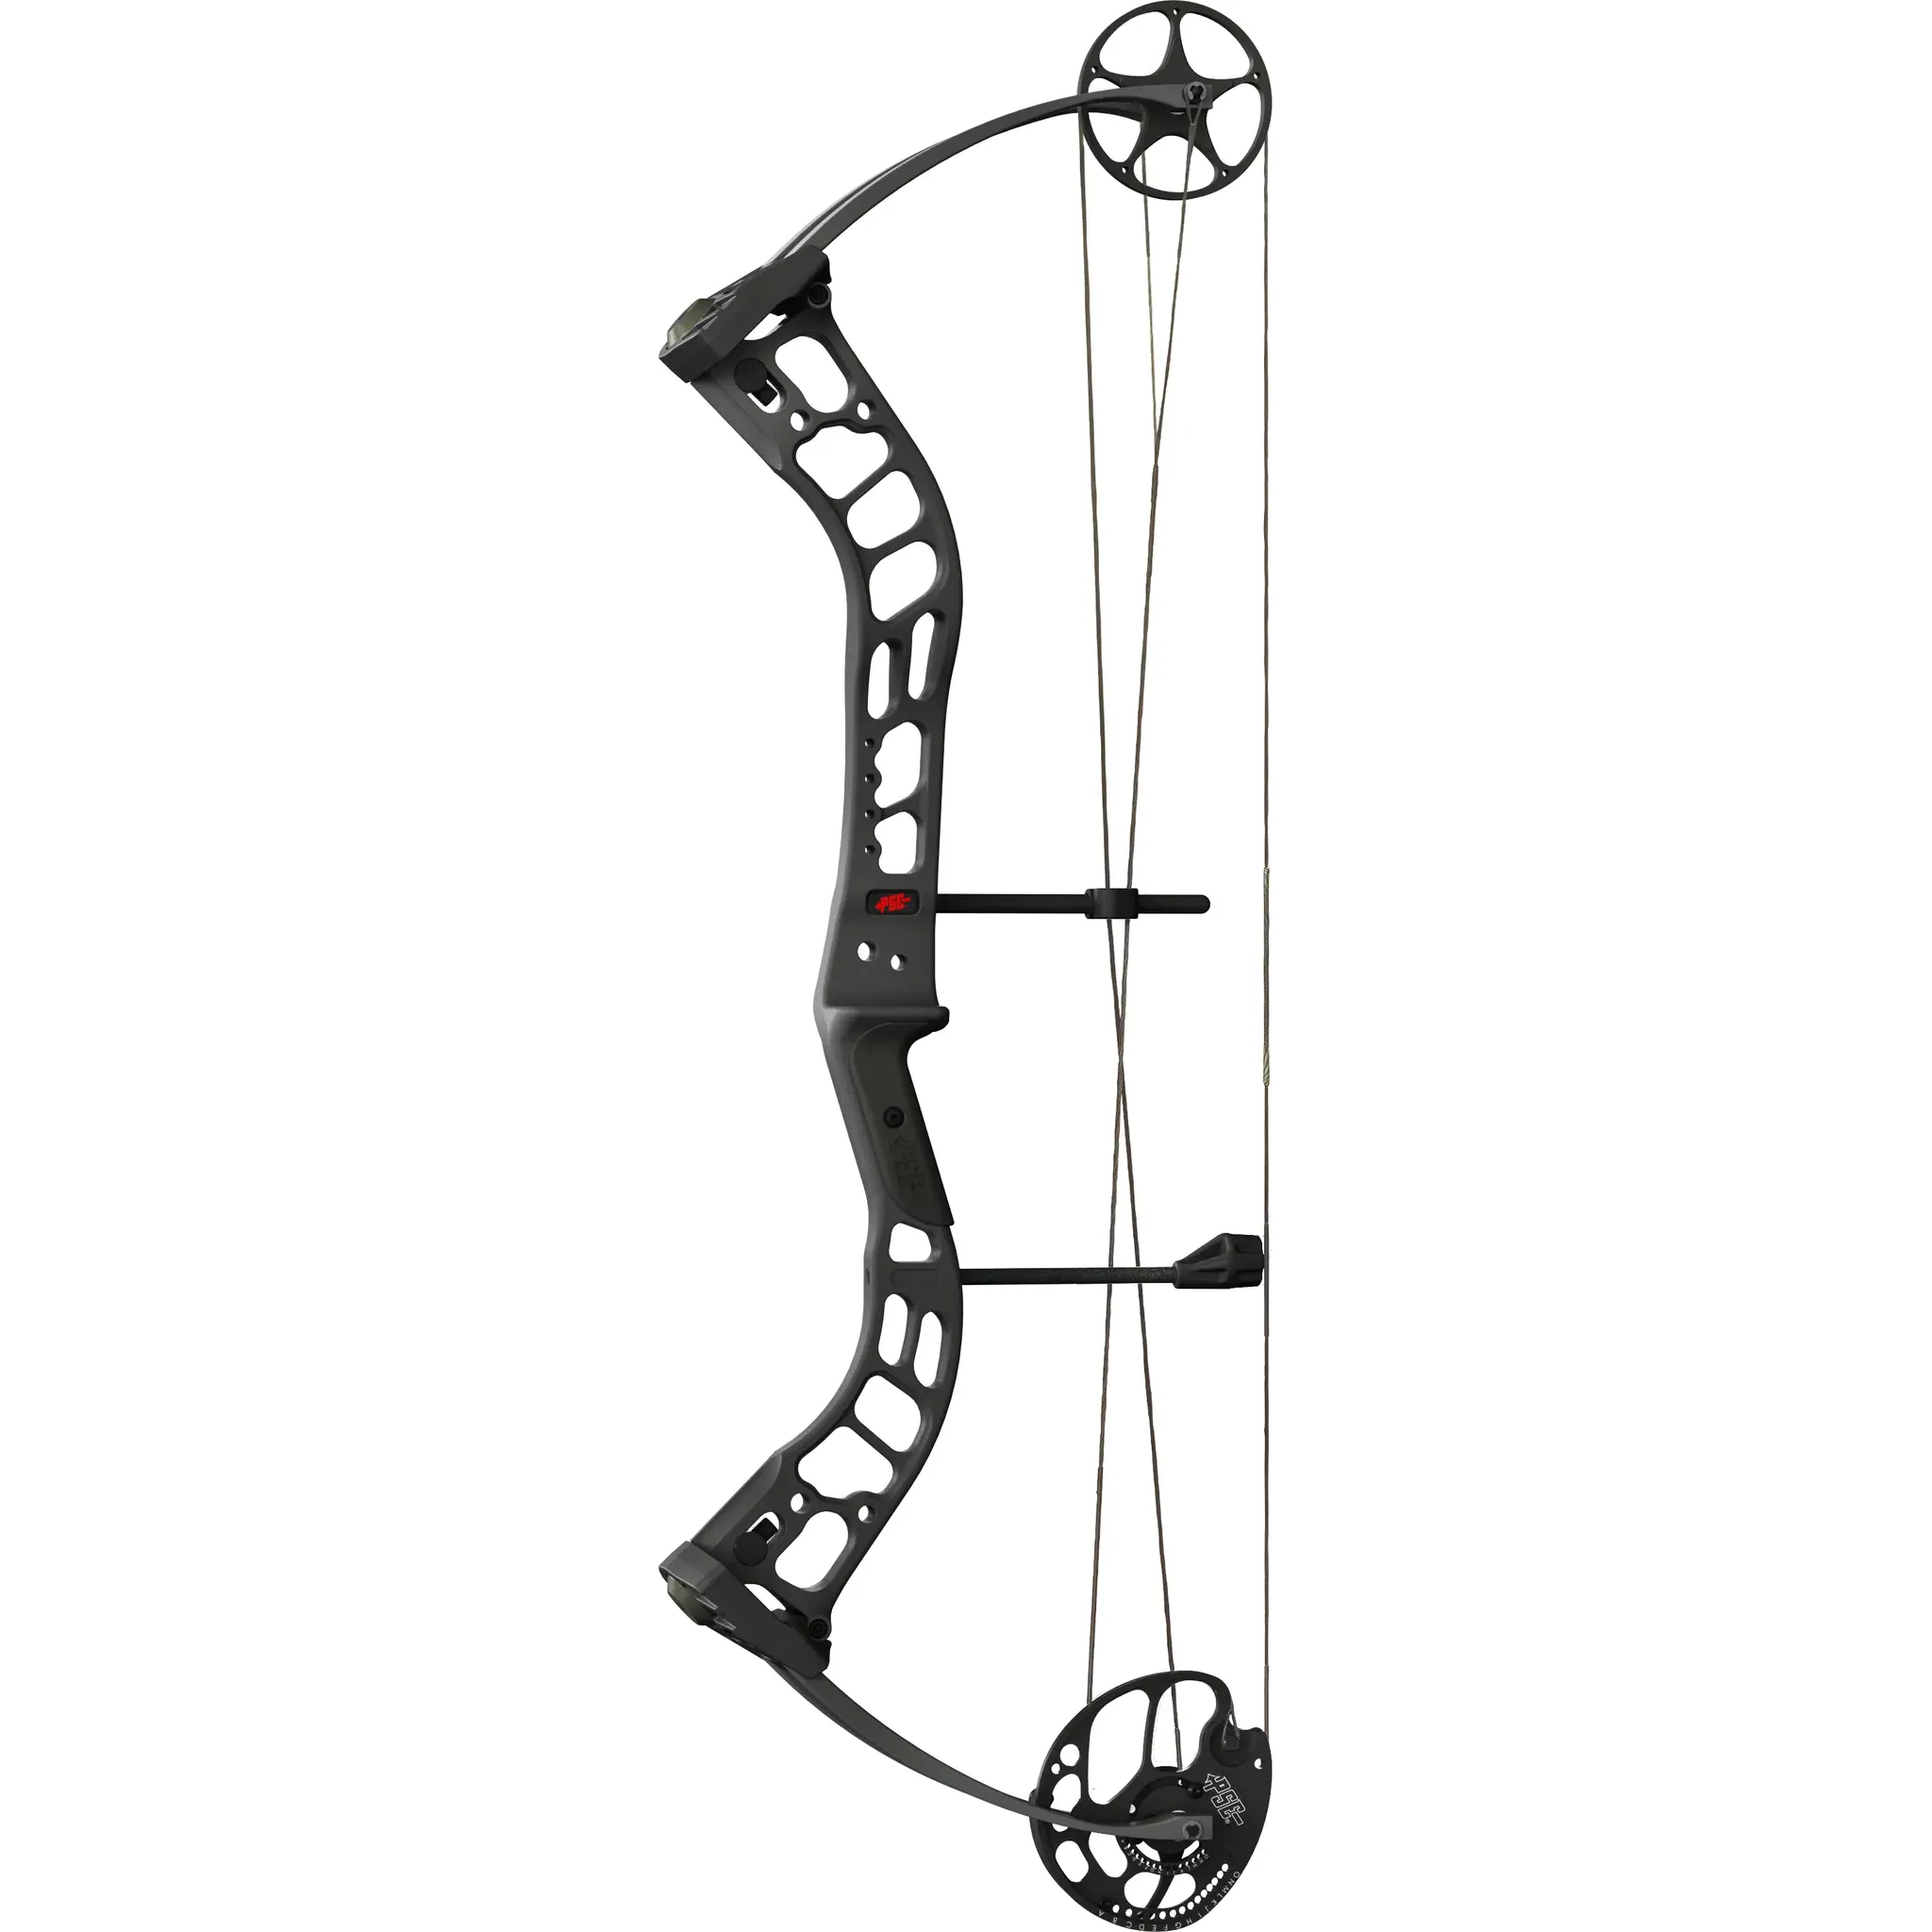 Stinger Atk Archery Direct